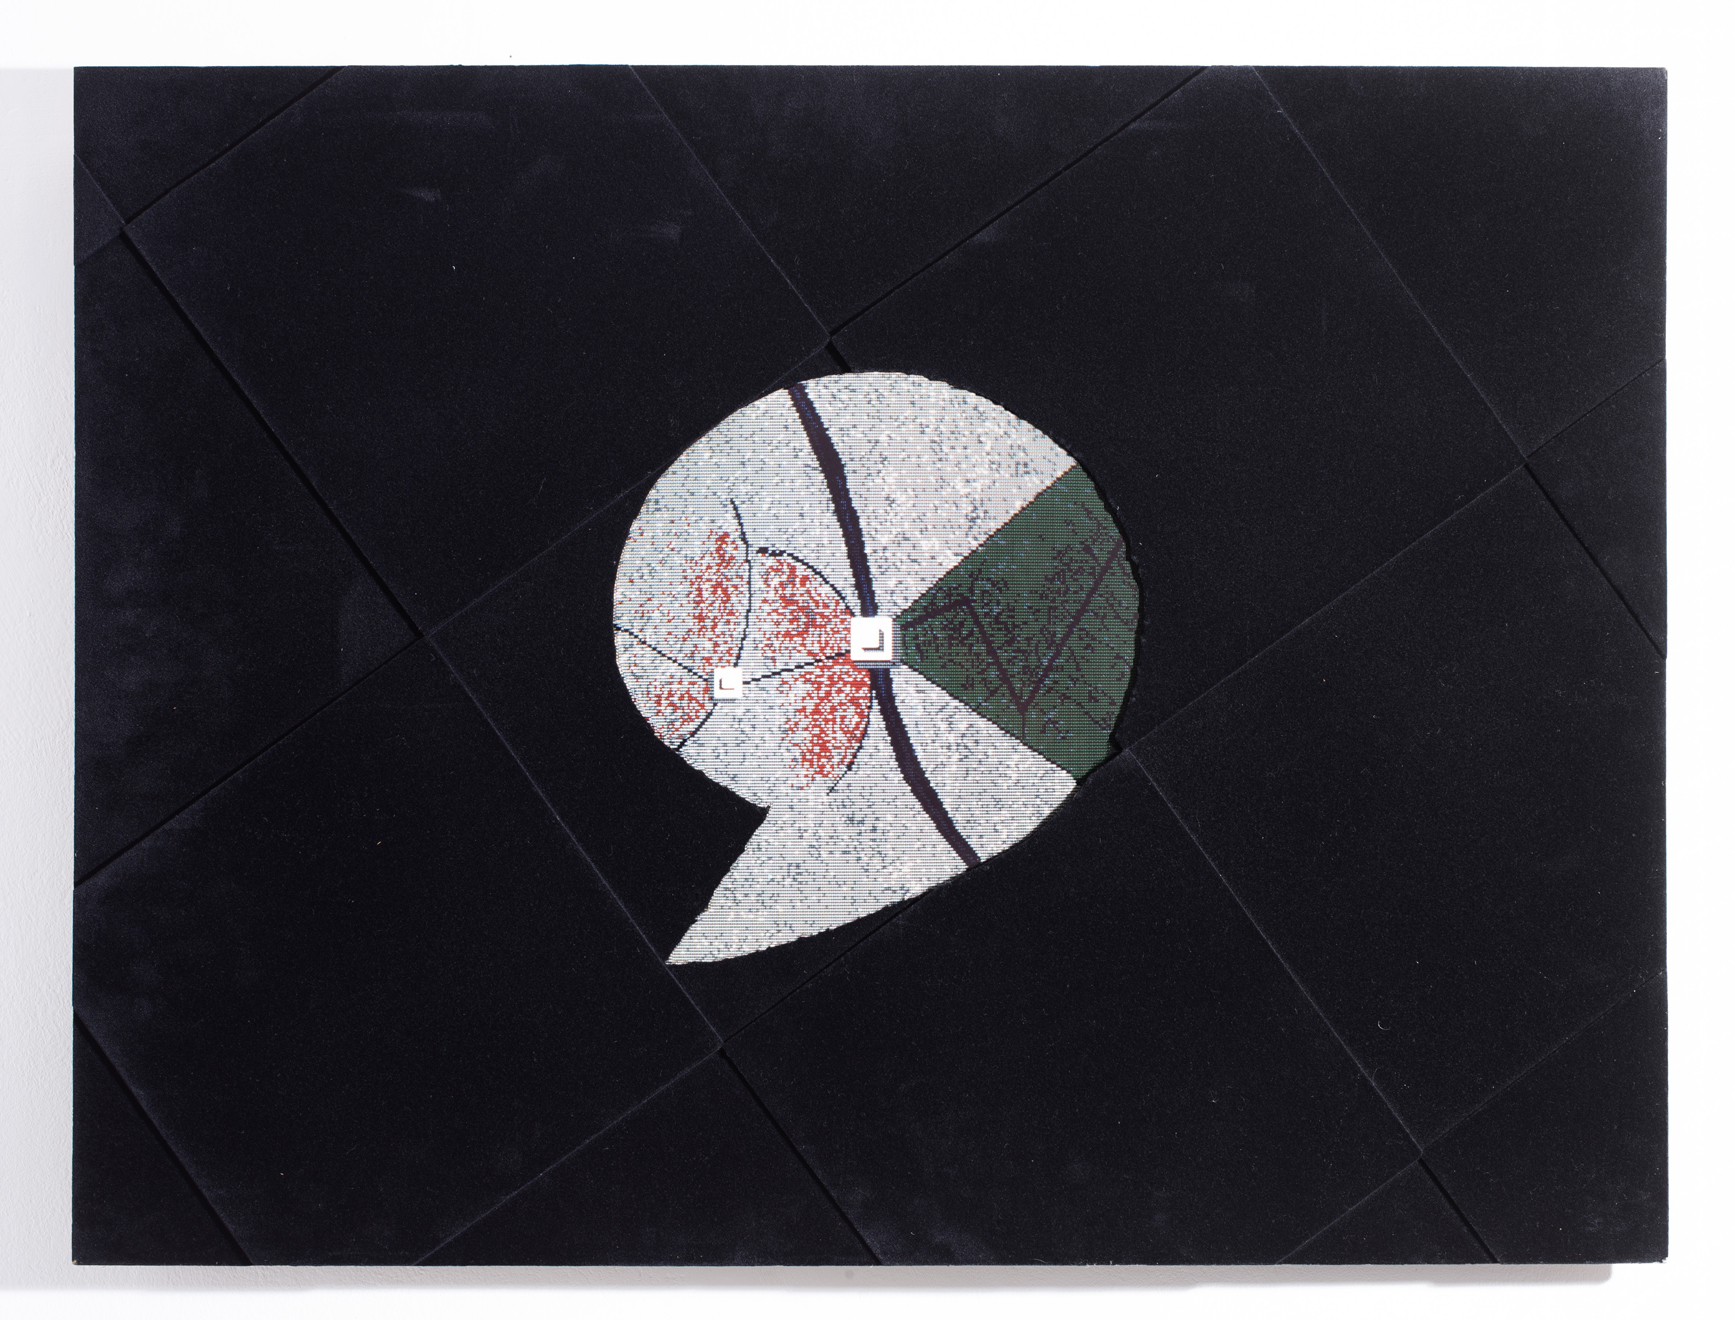 János SUGÁR: The Dimension of Consequences, 1990, fiberboard, flocking, computer graphics, 60 × 80 cm